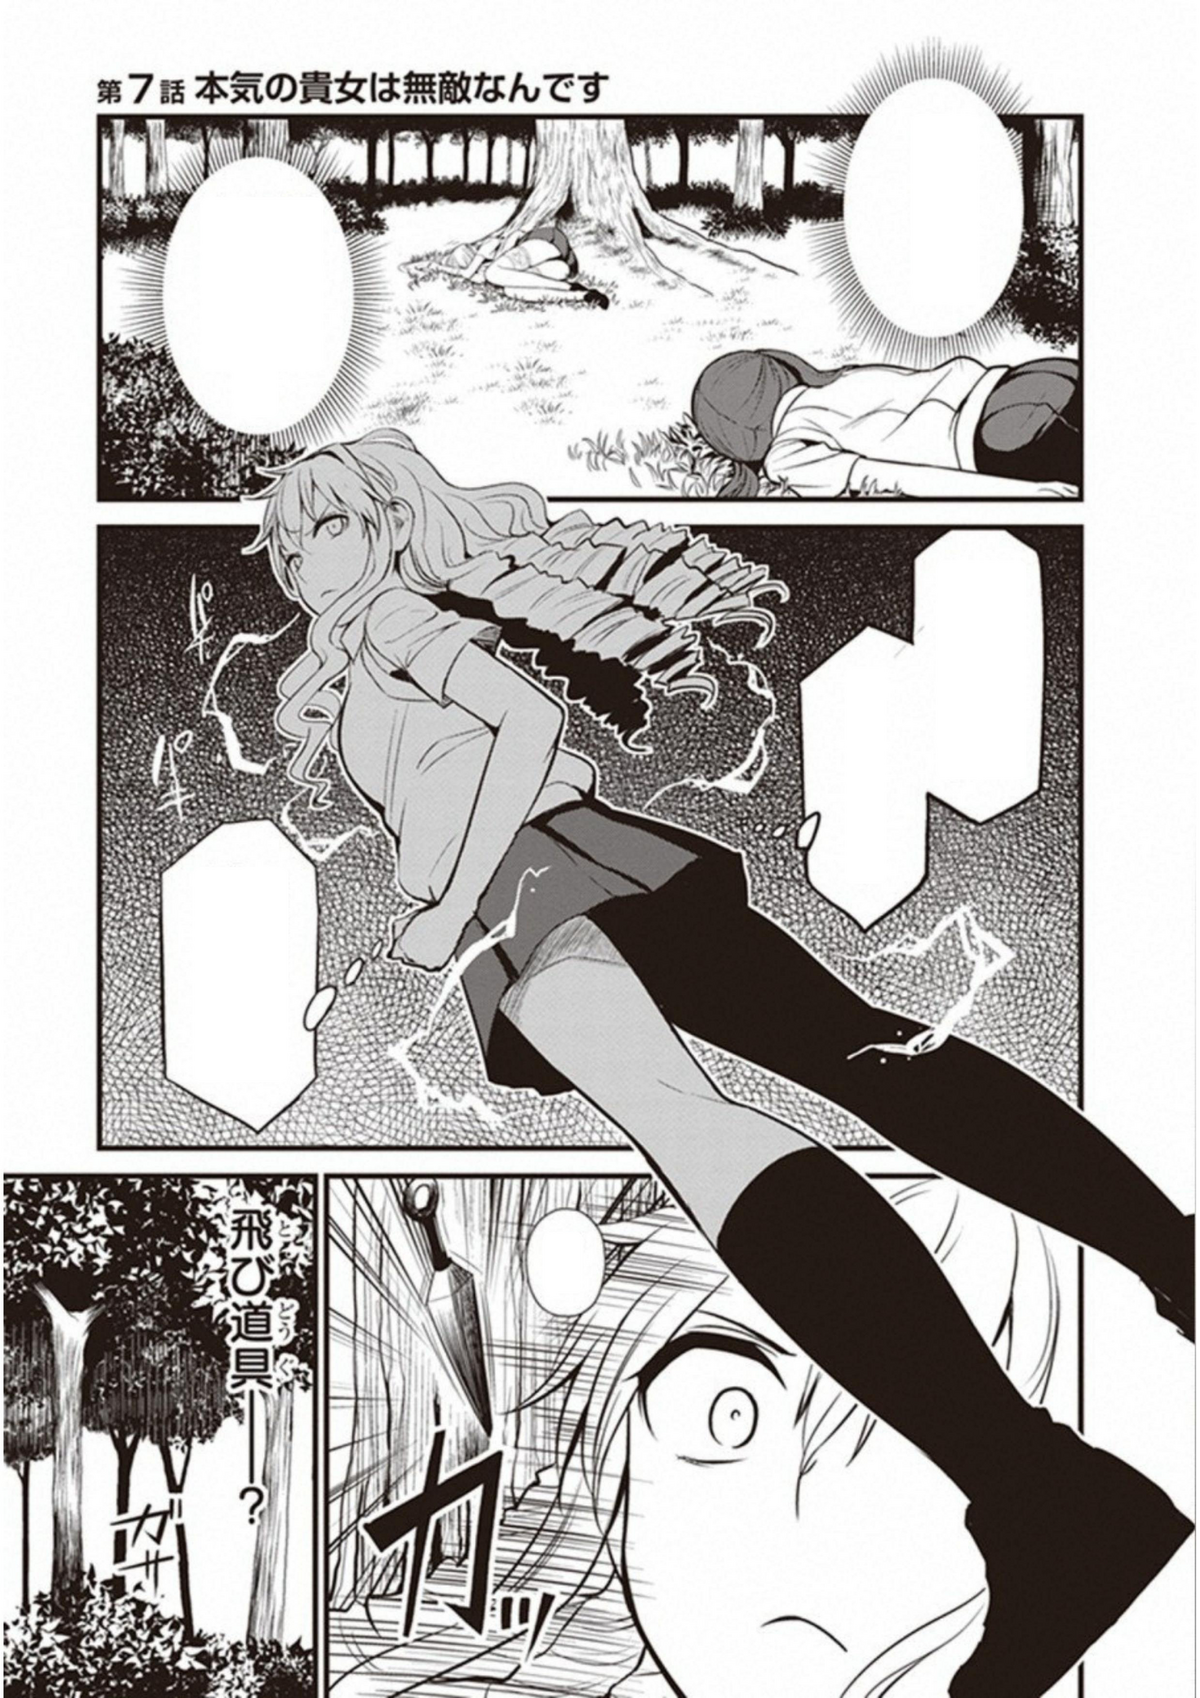 Astral Buddy Manga Chapter 007 | Toaru Majutsu no Index Wiki | Fandom